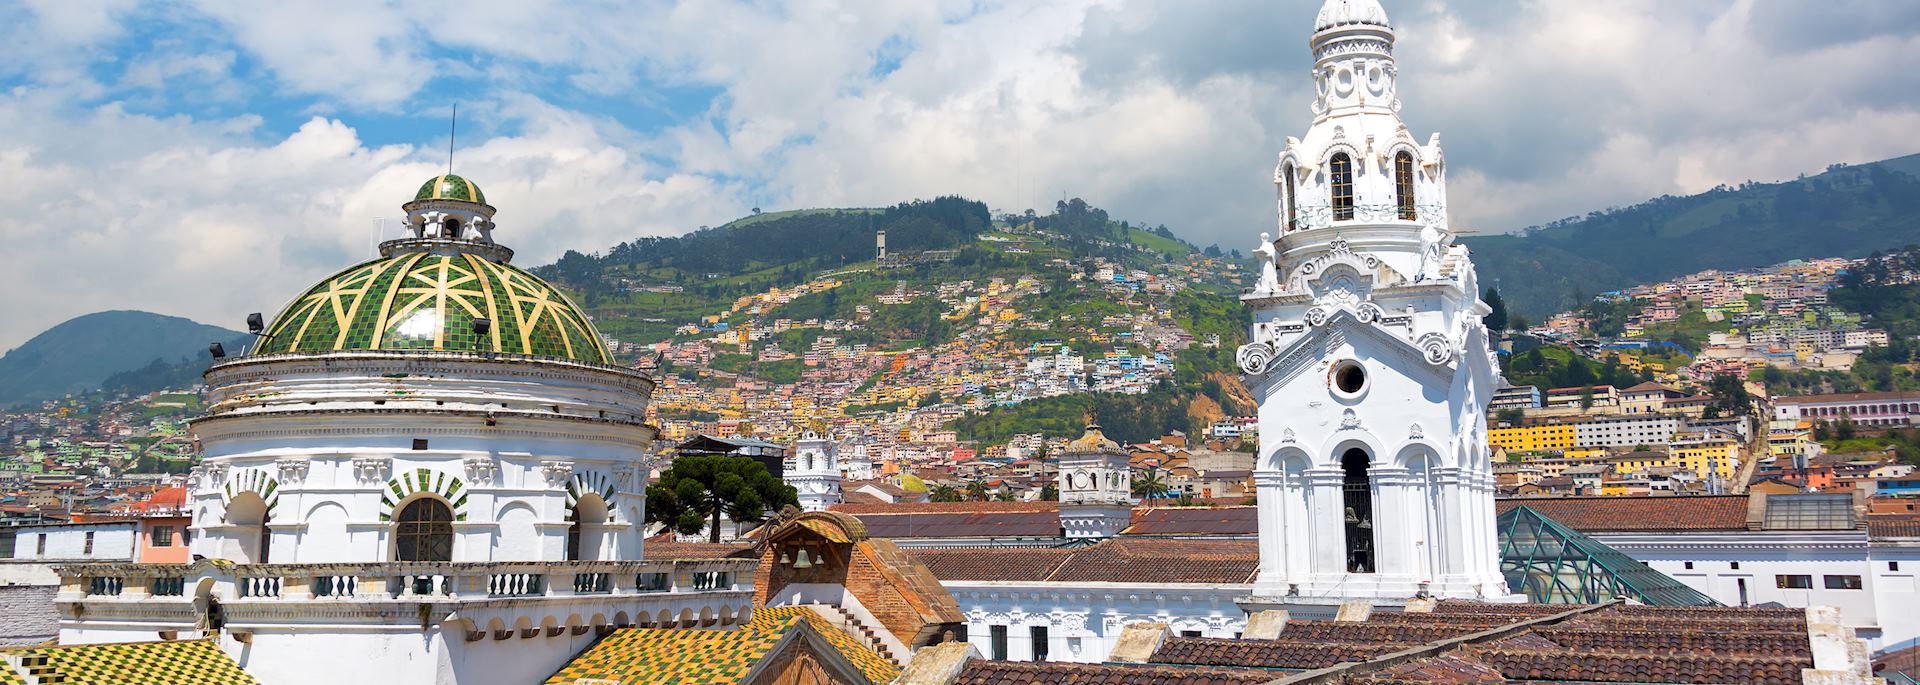 Quito, the Ecuadorian capital